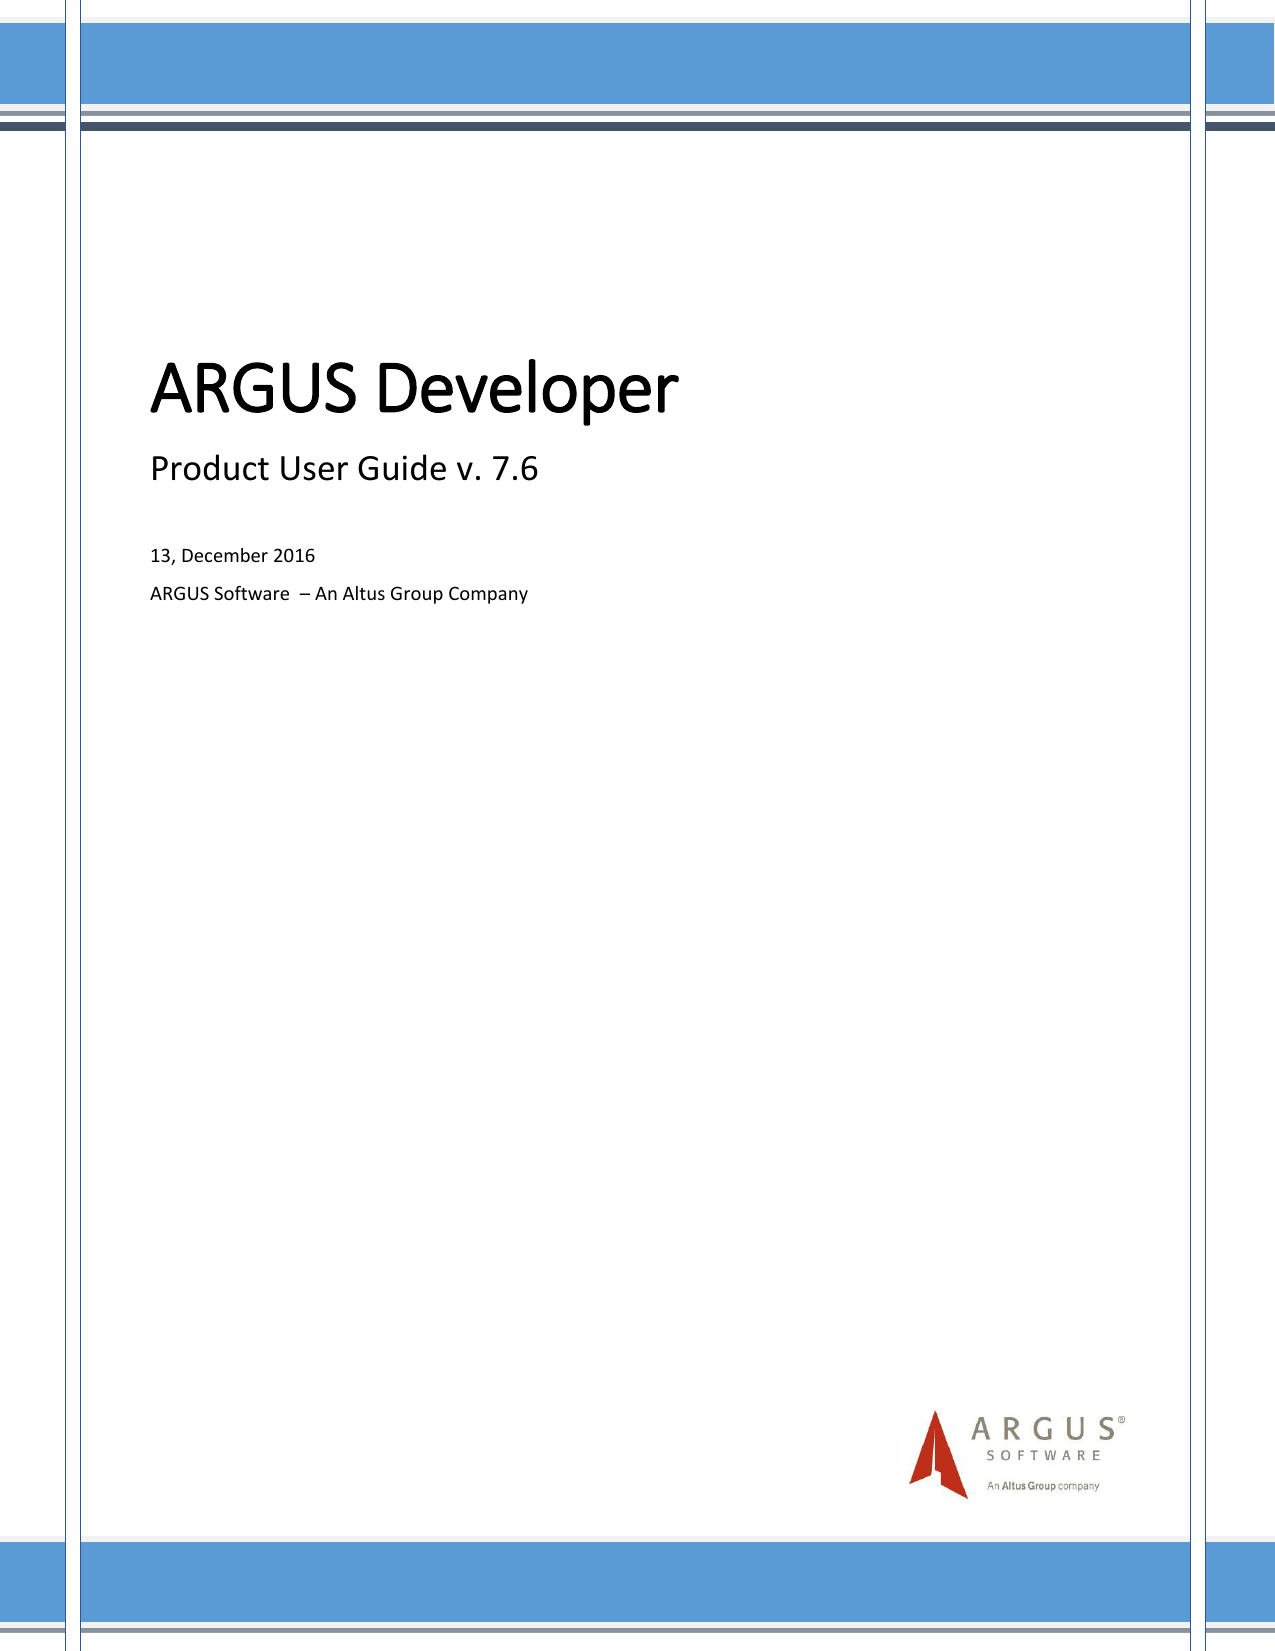 argus developer in practice